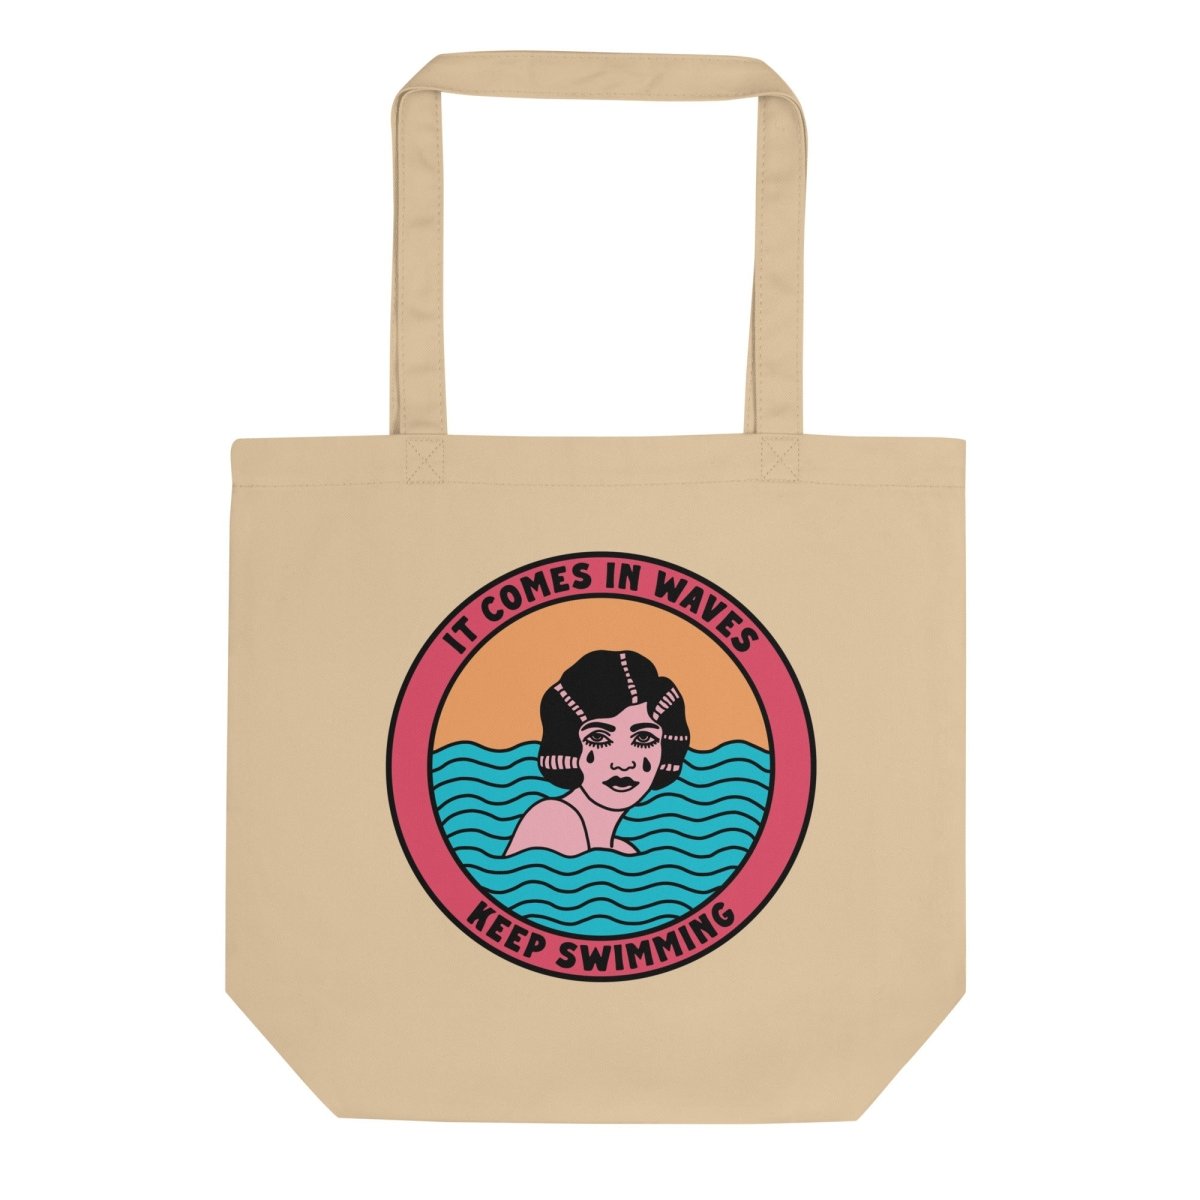 It comes in waves eco tote bag - Tote Bag - Pretty Bad Co.